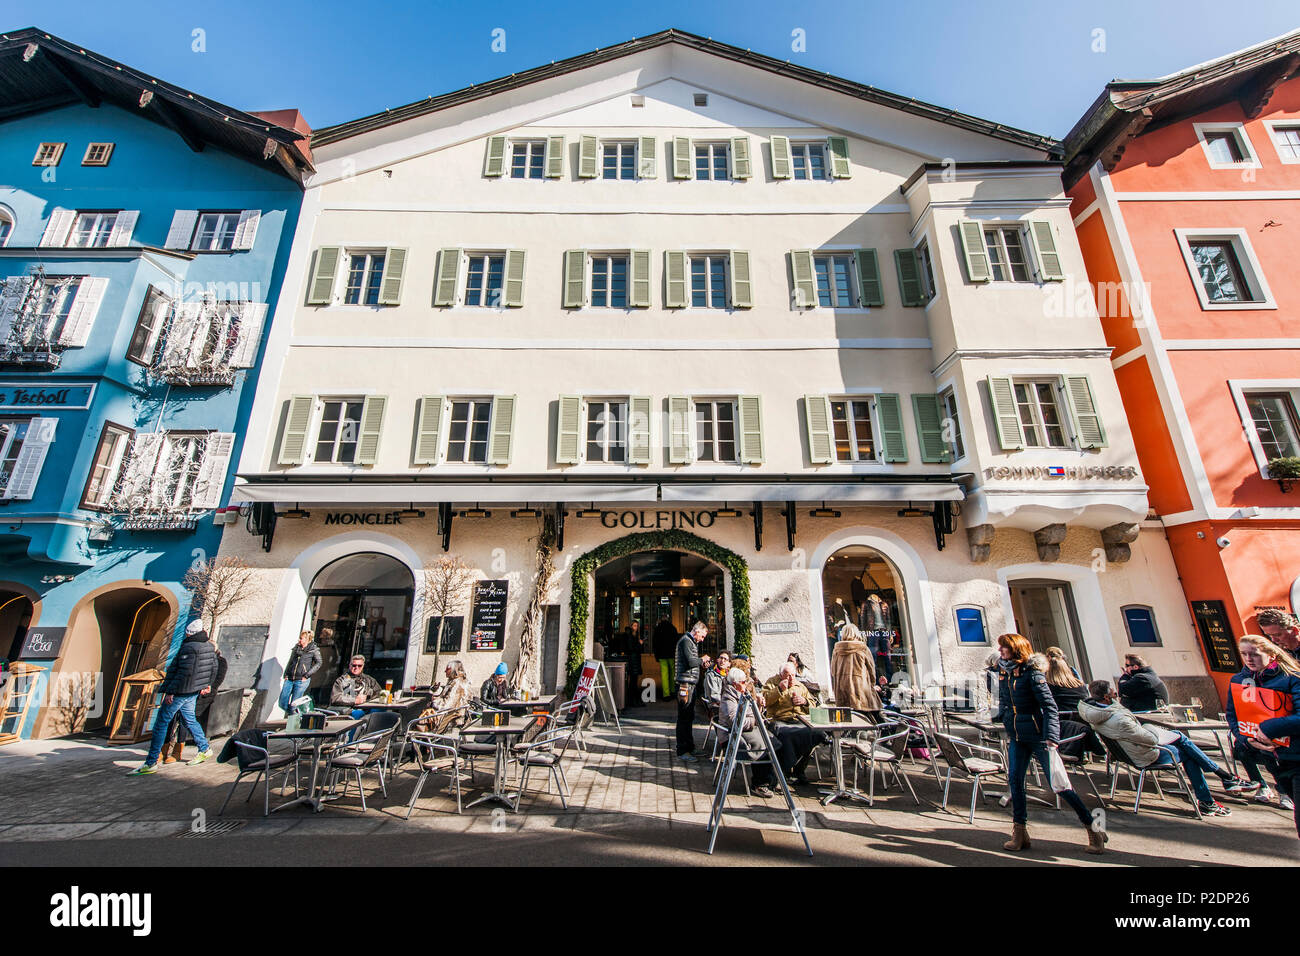 Shopping street in the old town Vorderstadt in Kitzbuehel, Tyrol, Austria, Europe Stock Photo